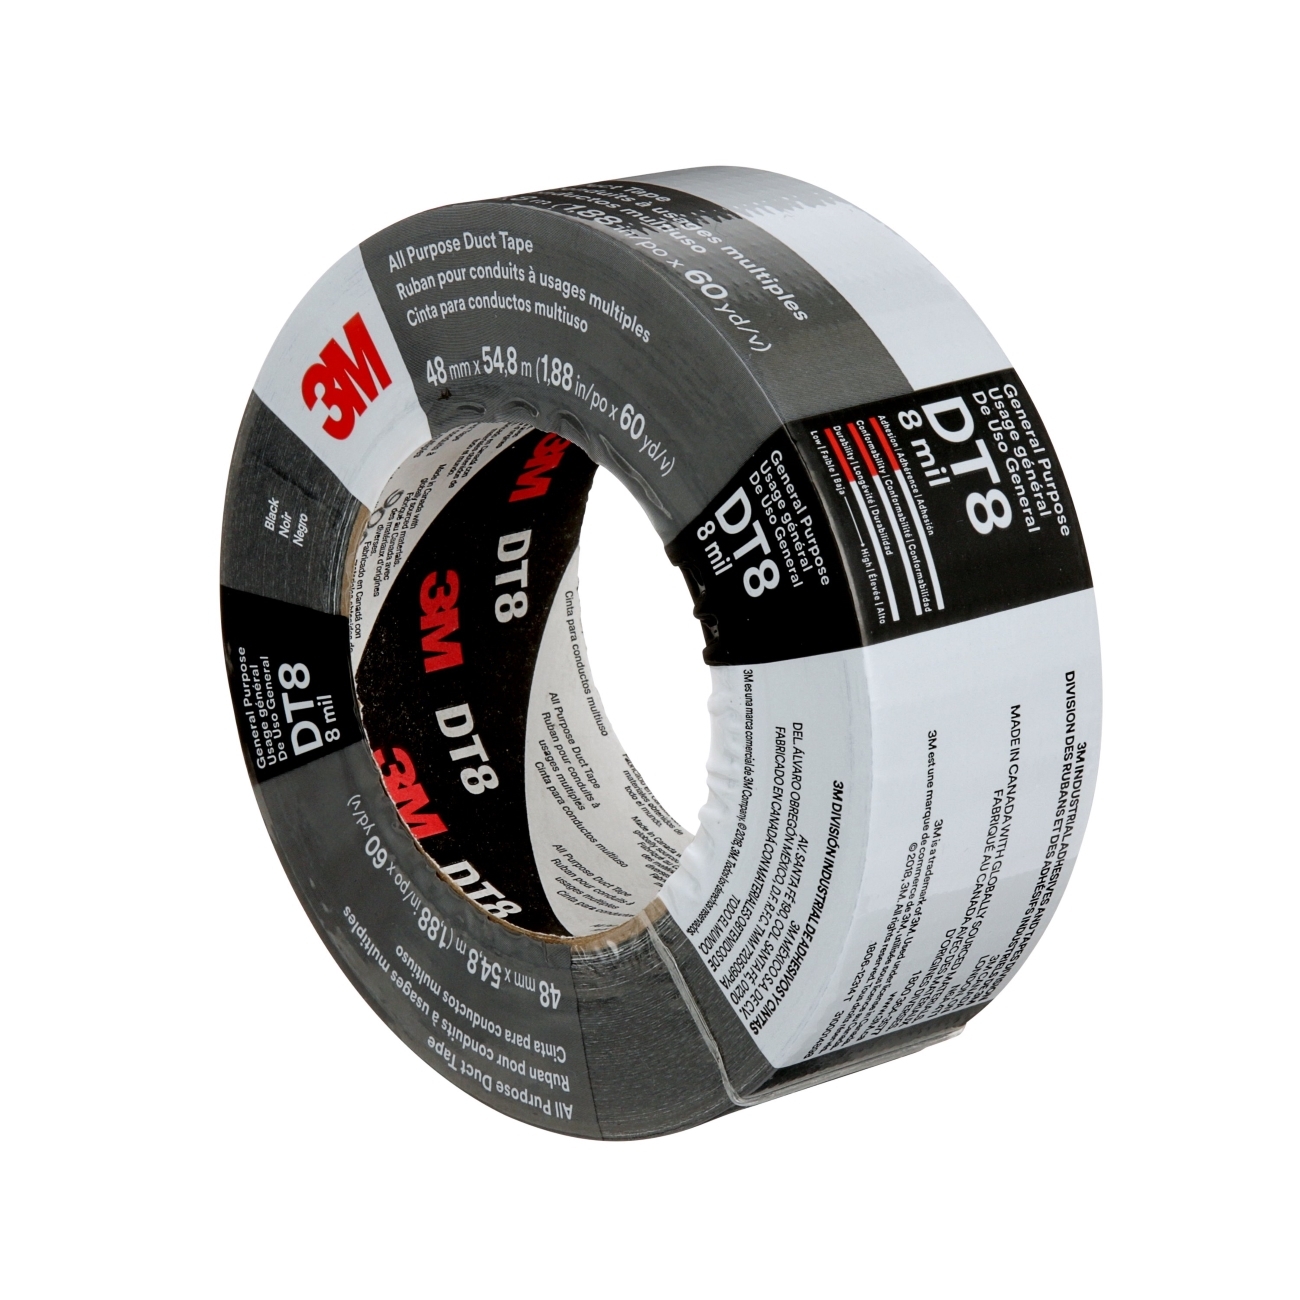 3M universele tape DT8, zilver, 48 mm x 55 m, 0,2 mm